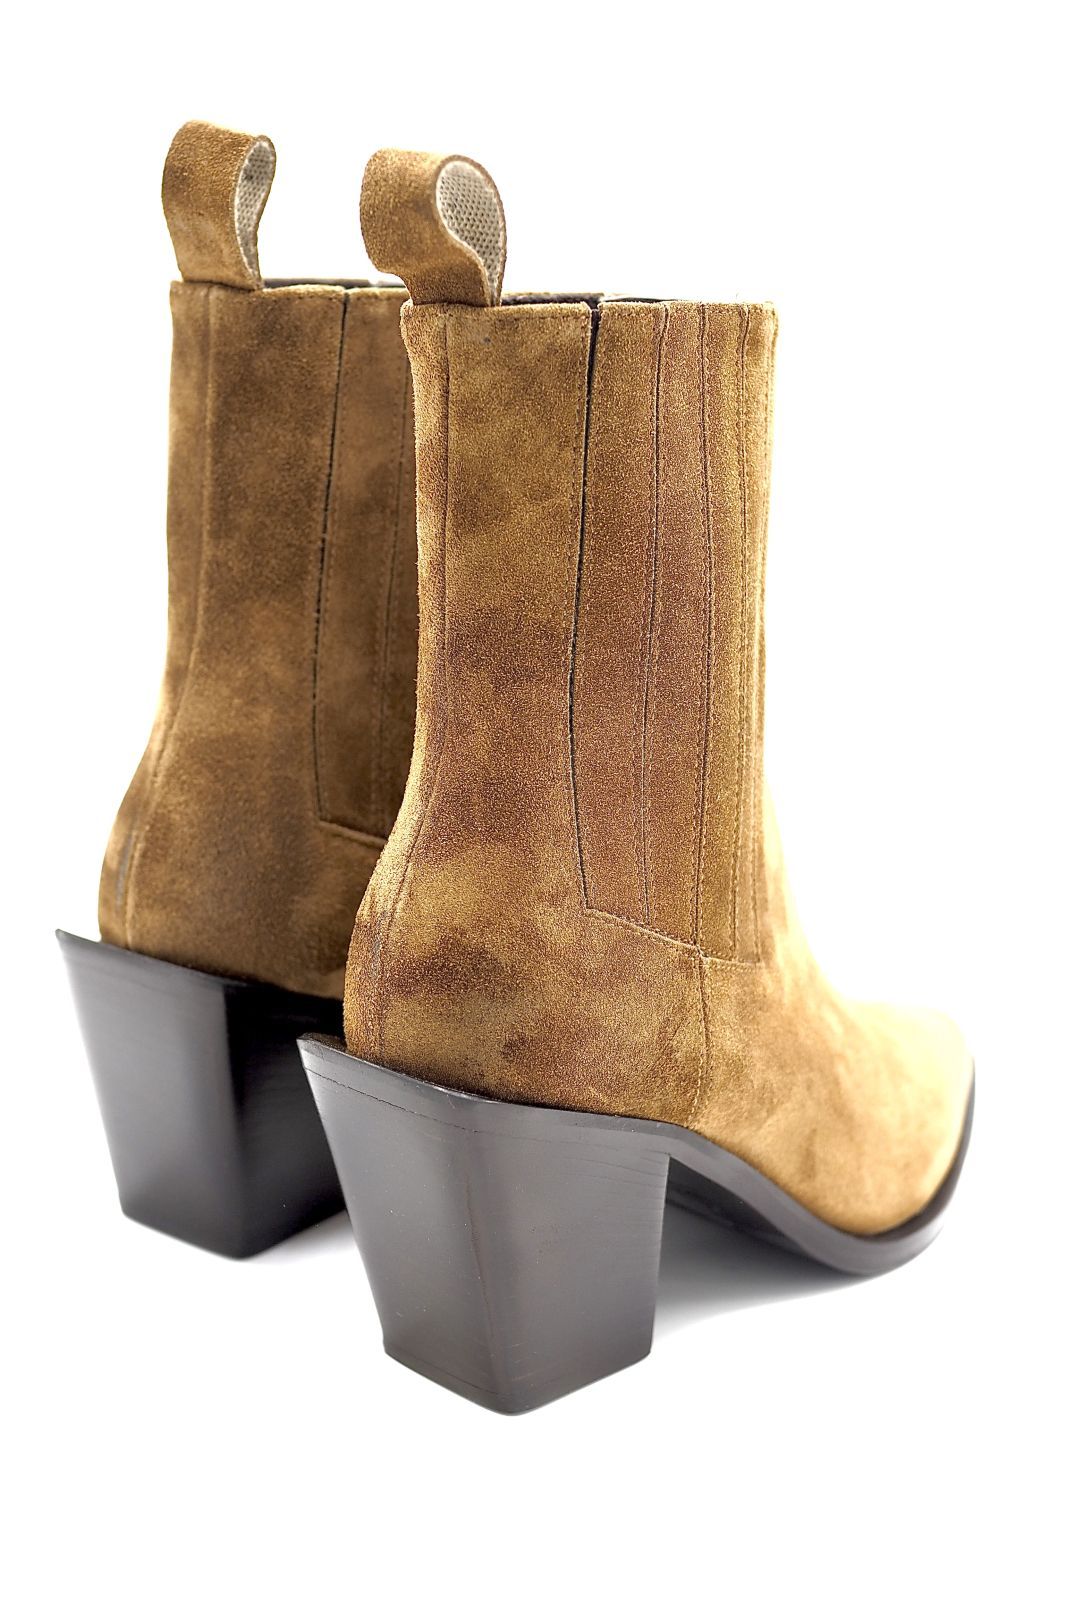 Laura Bellariva boots Naturel femmes (LBEL-Santiag pointue - 6280 Santiag cognac nubuk) - Marine | Much more than shoes